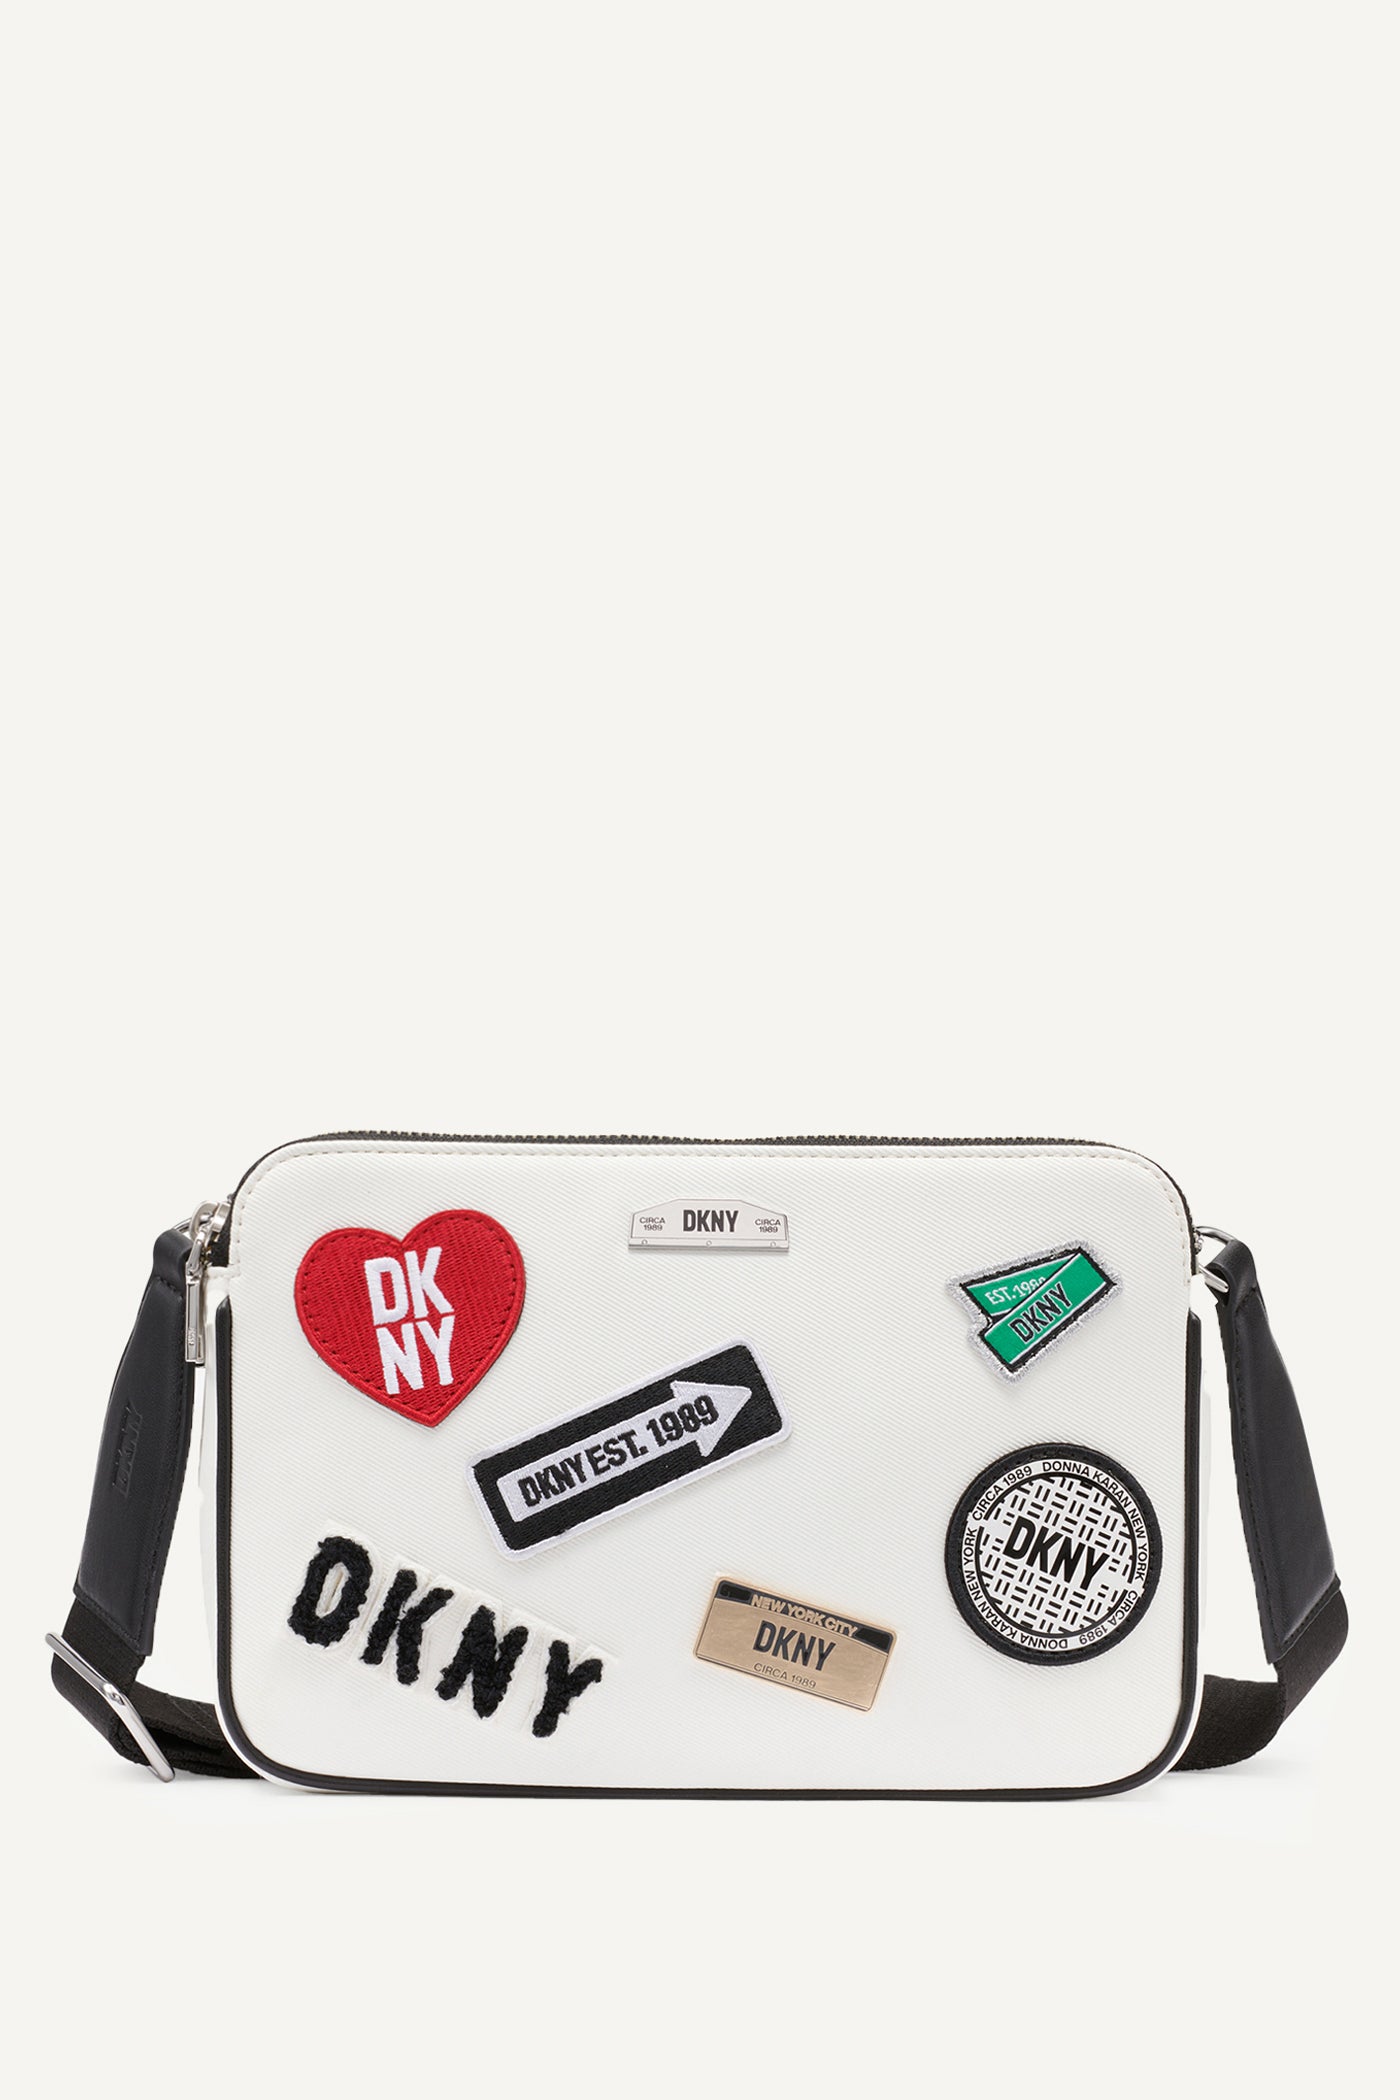 DKNY Patent Leather Handbags | Mercari